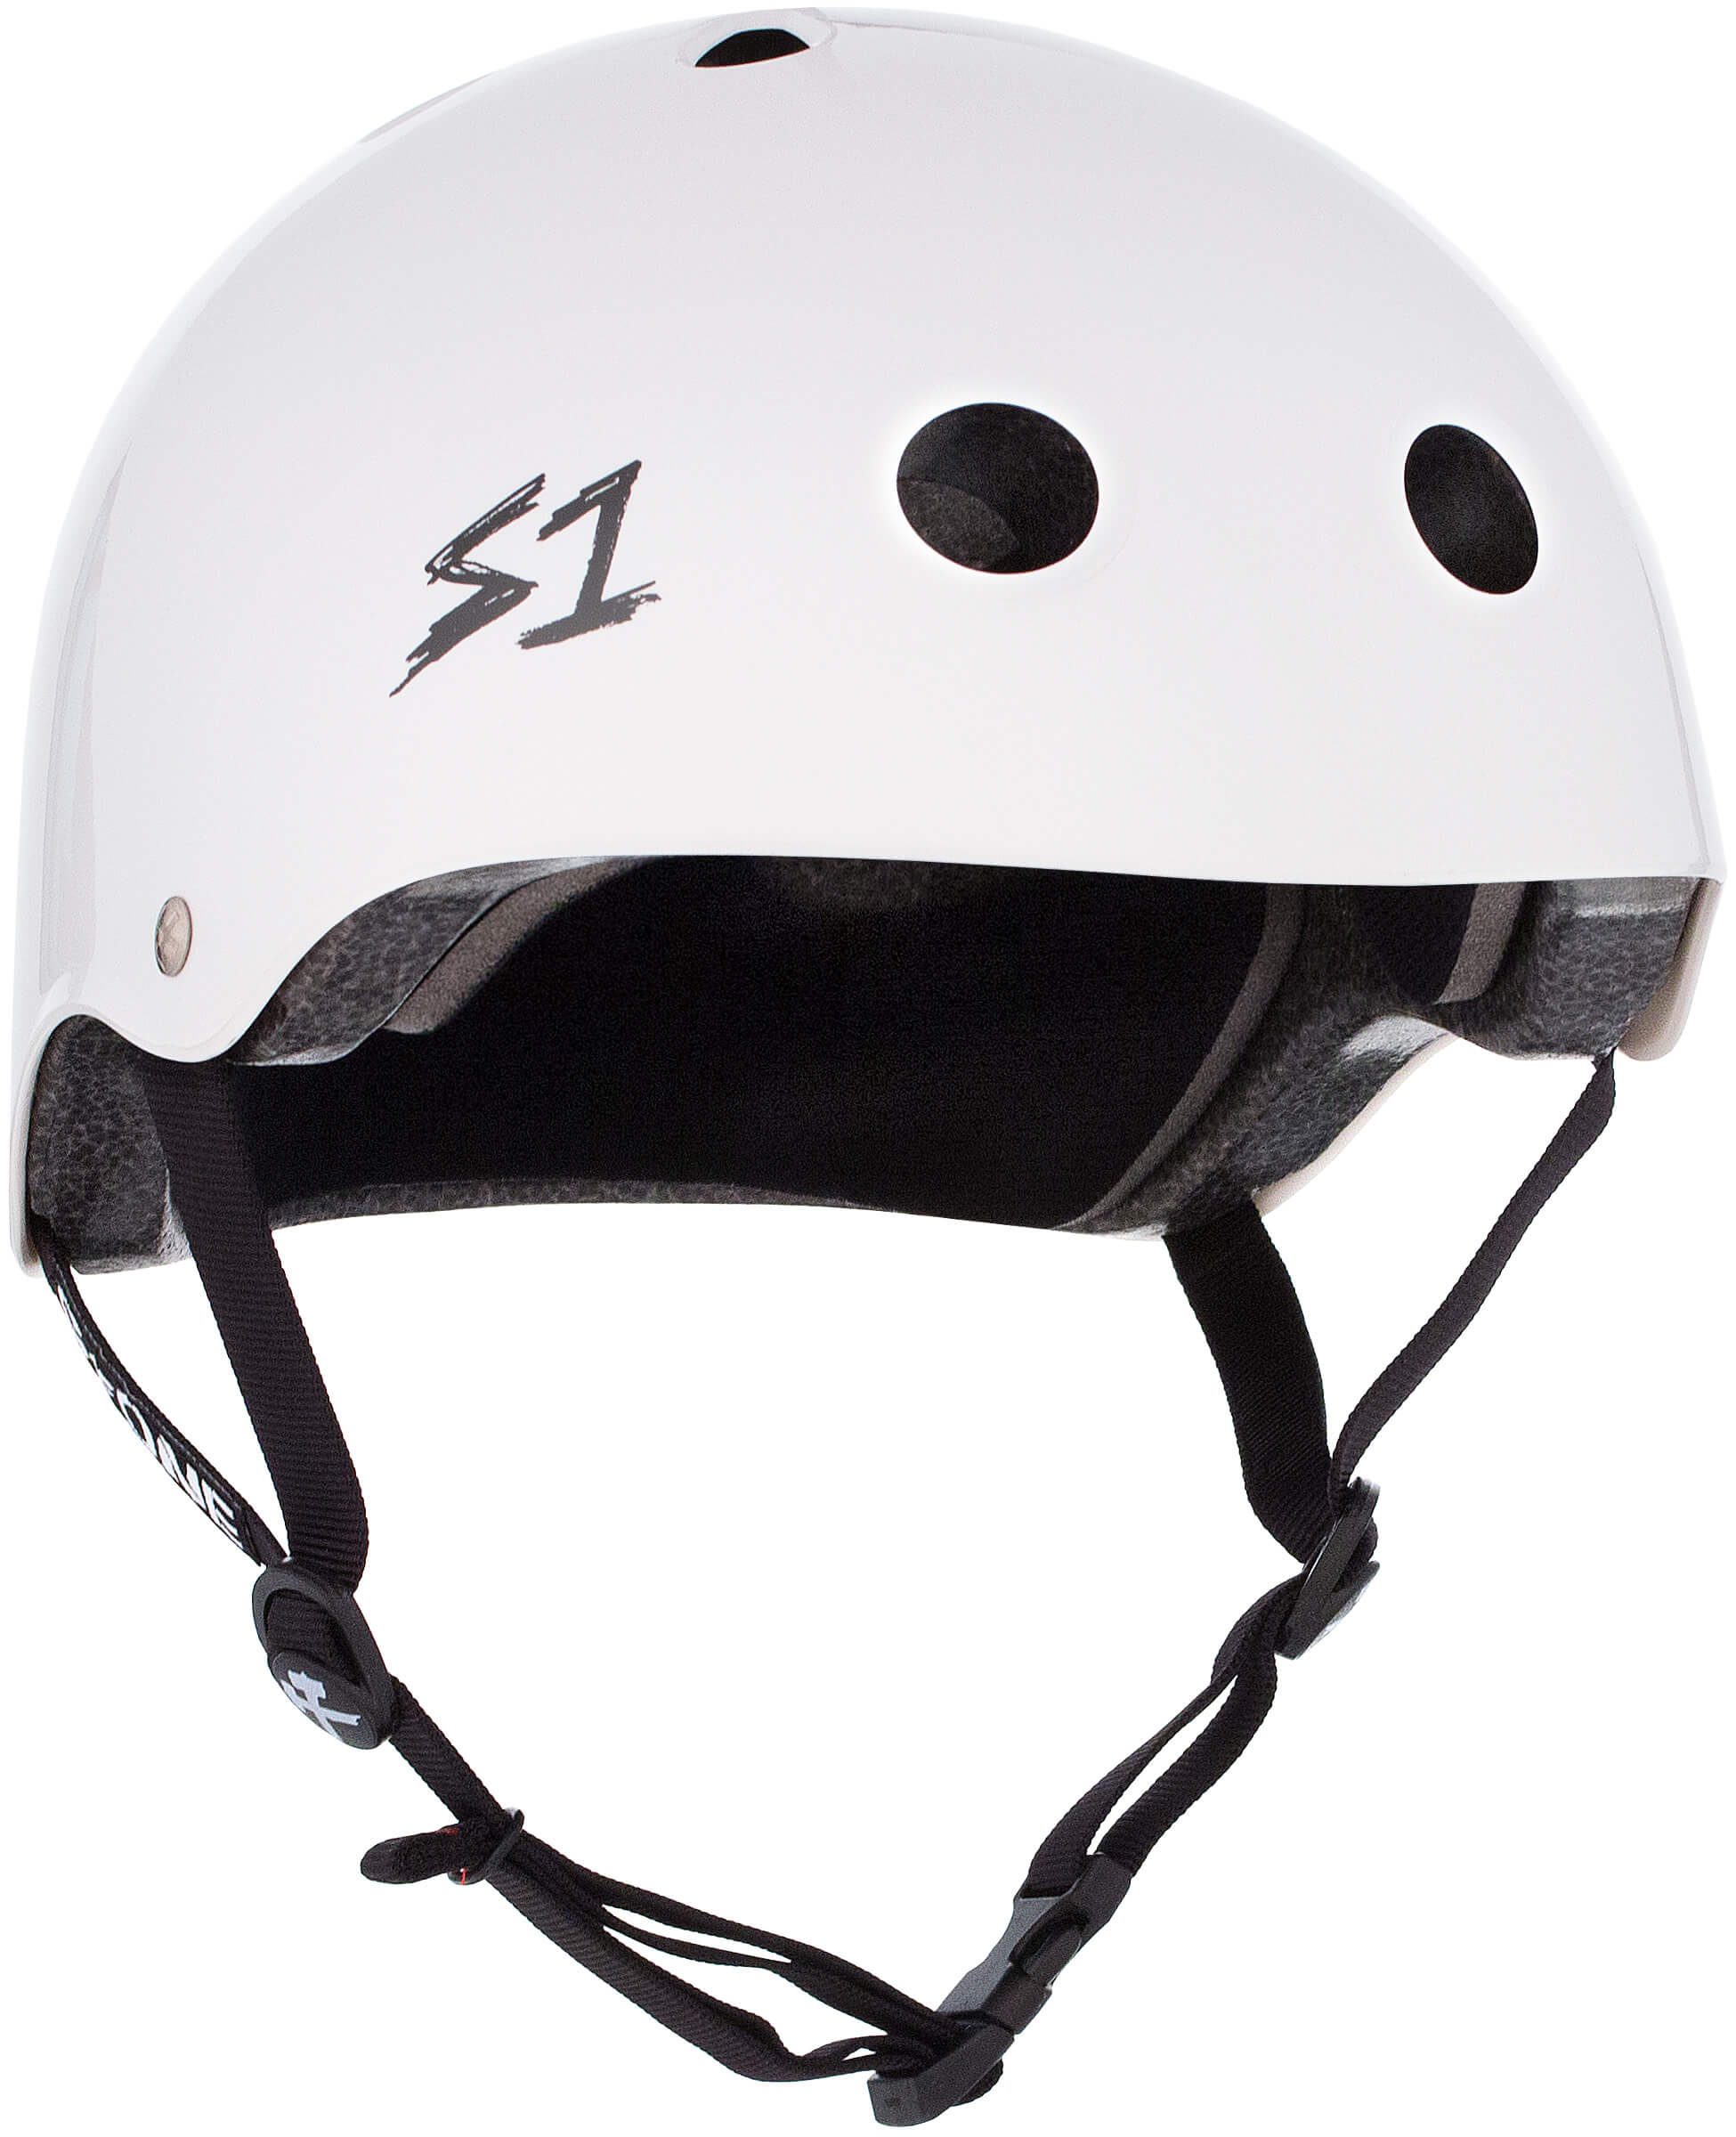 S1 Lifer Helmet - Casque blanc gloss